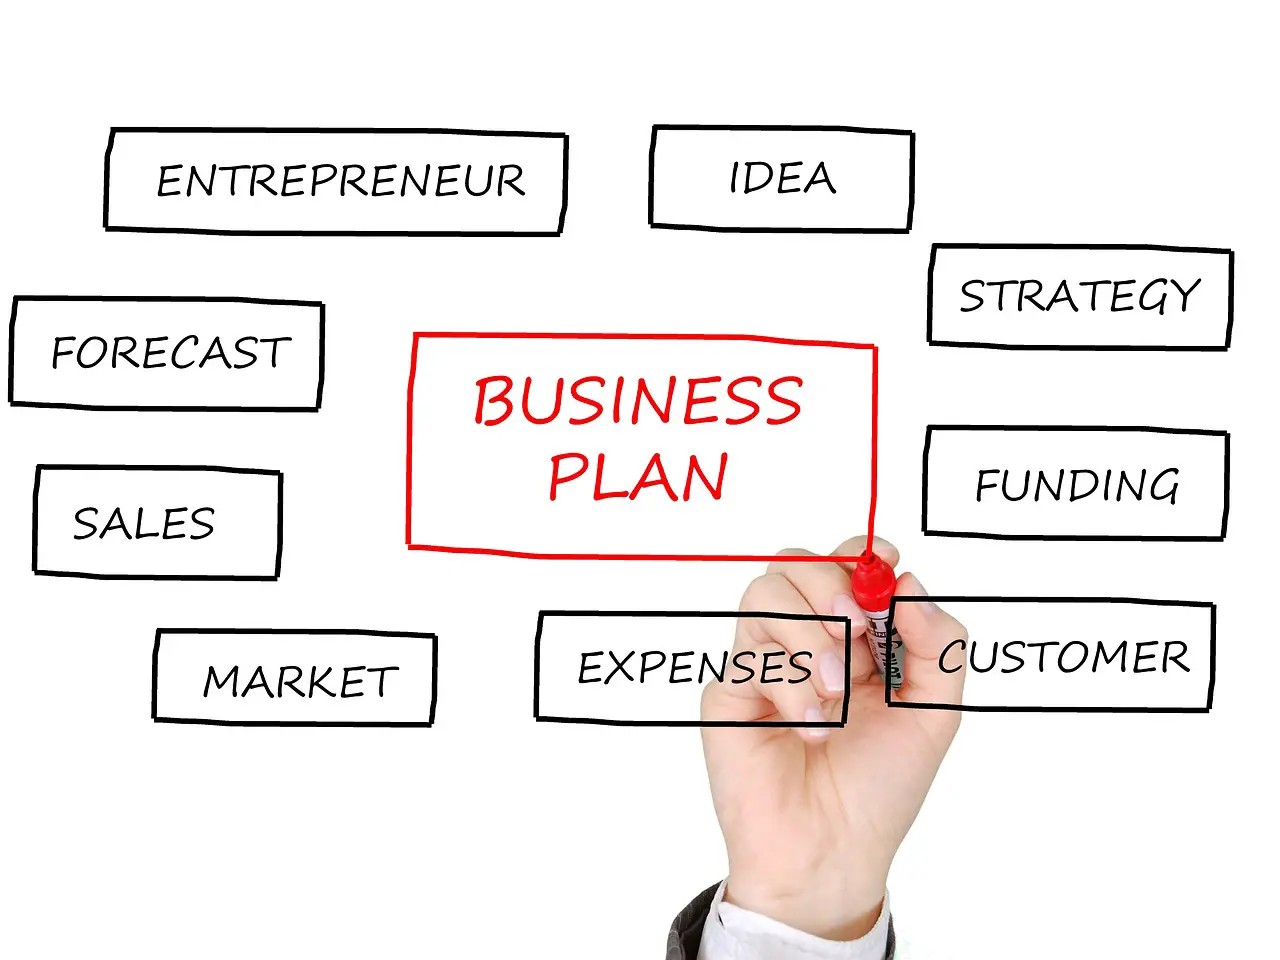 Write a business plan